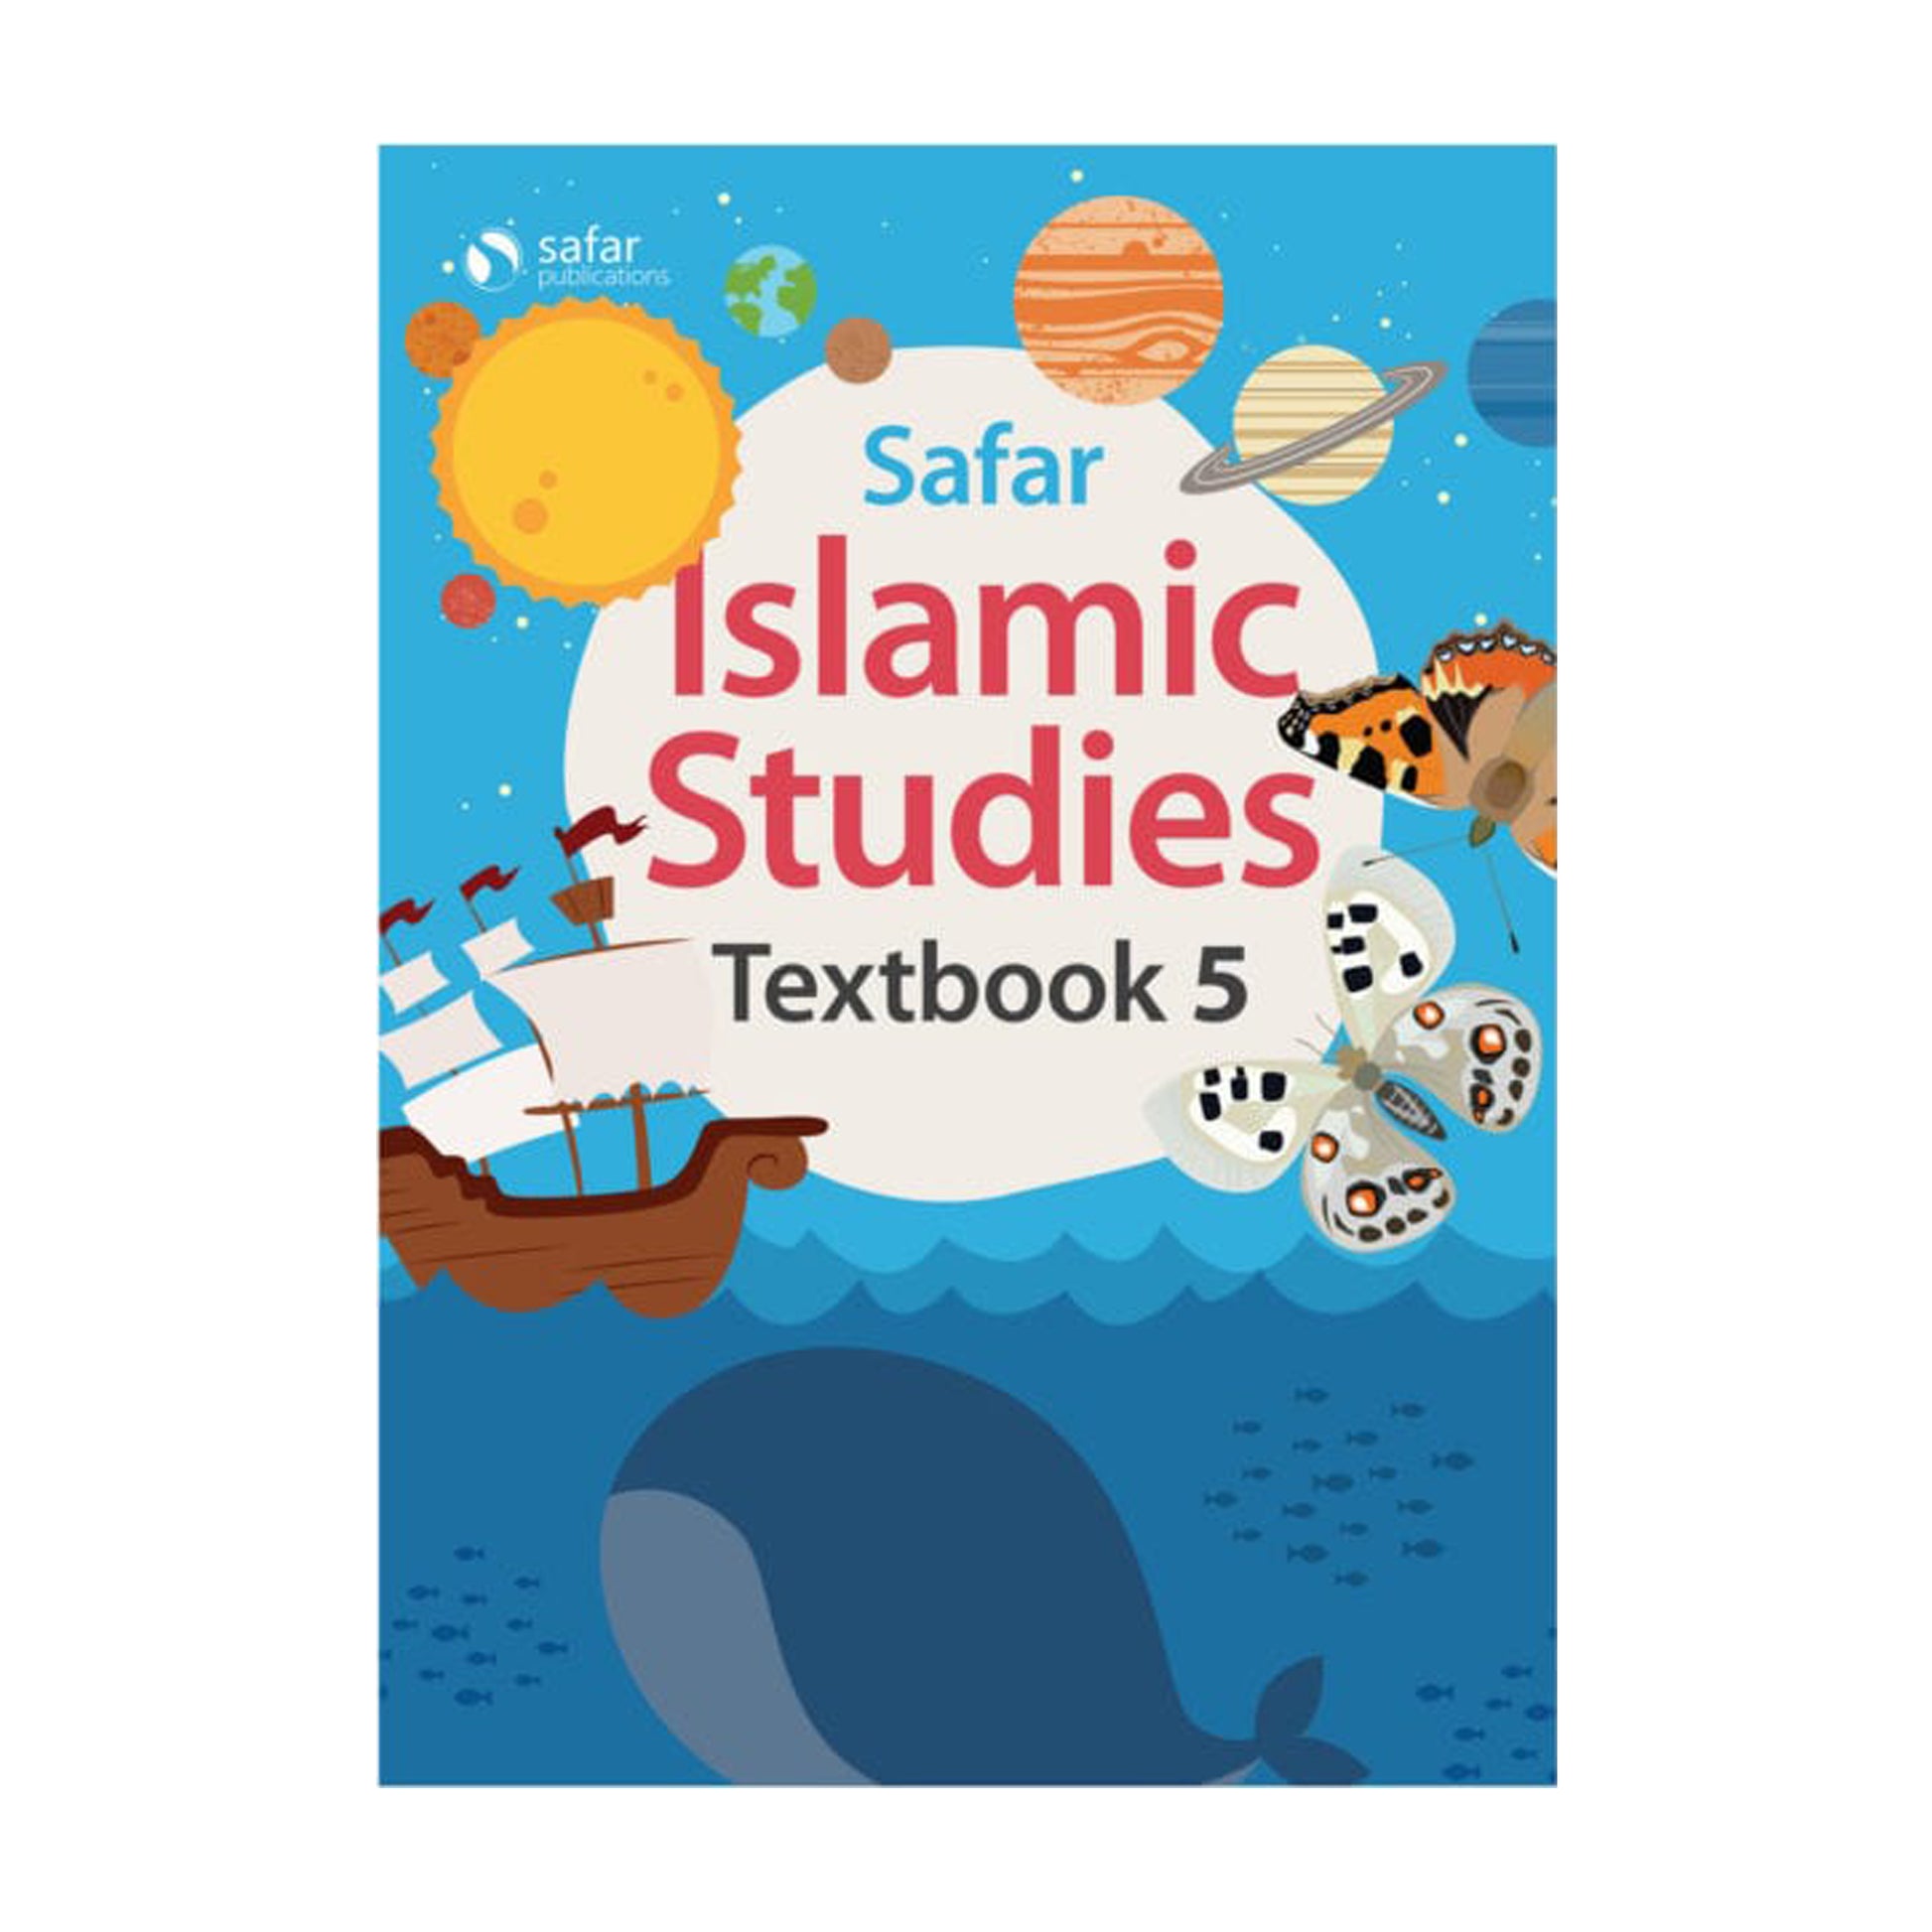 Islamic Studies Textbook 5